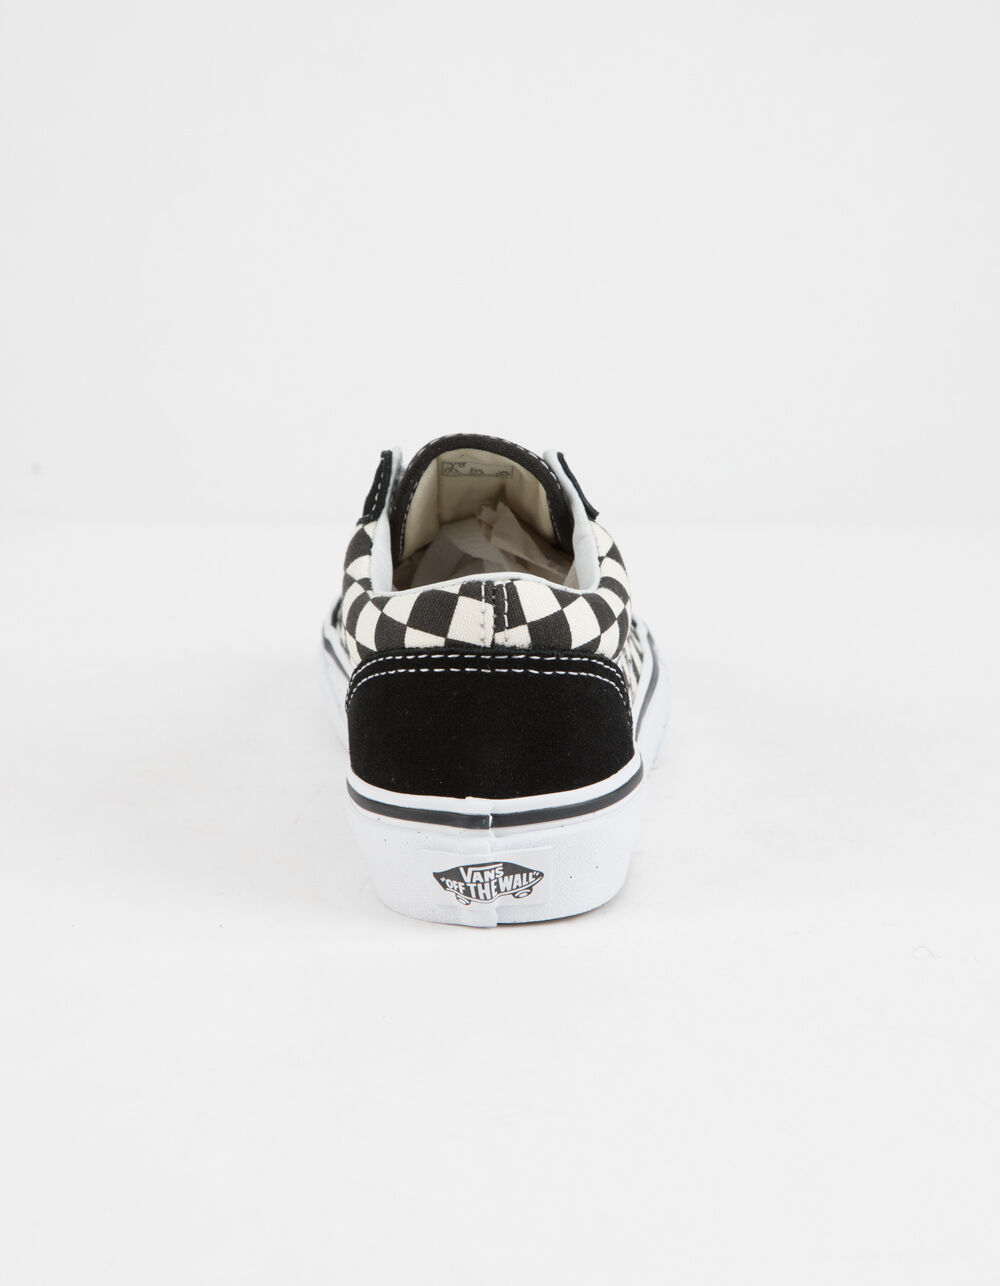 VANS Checkerboard Primary Check Old Skool Black & White Kids Shoes